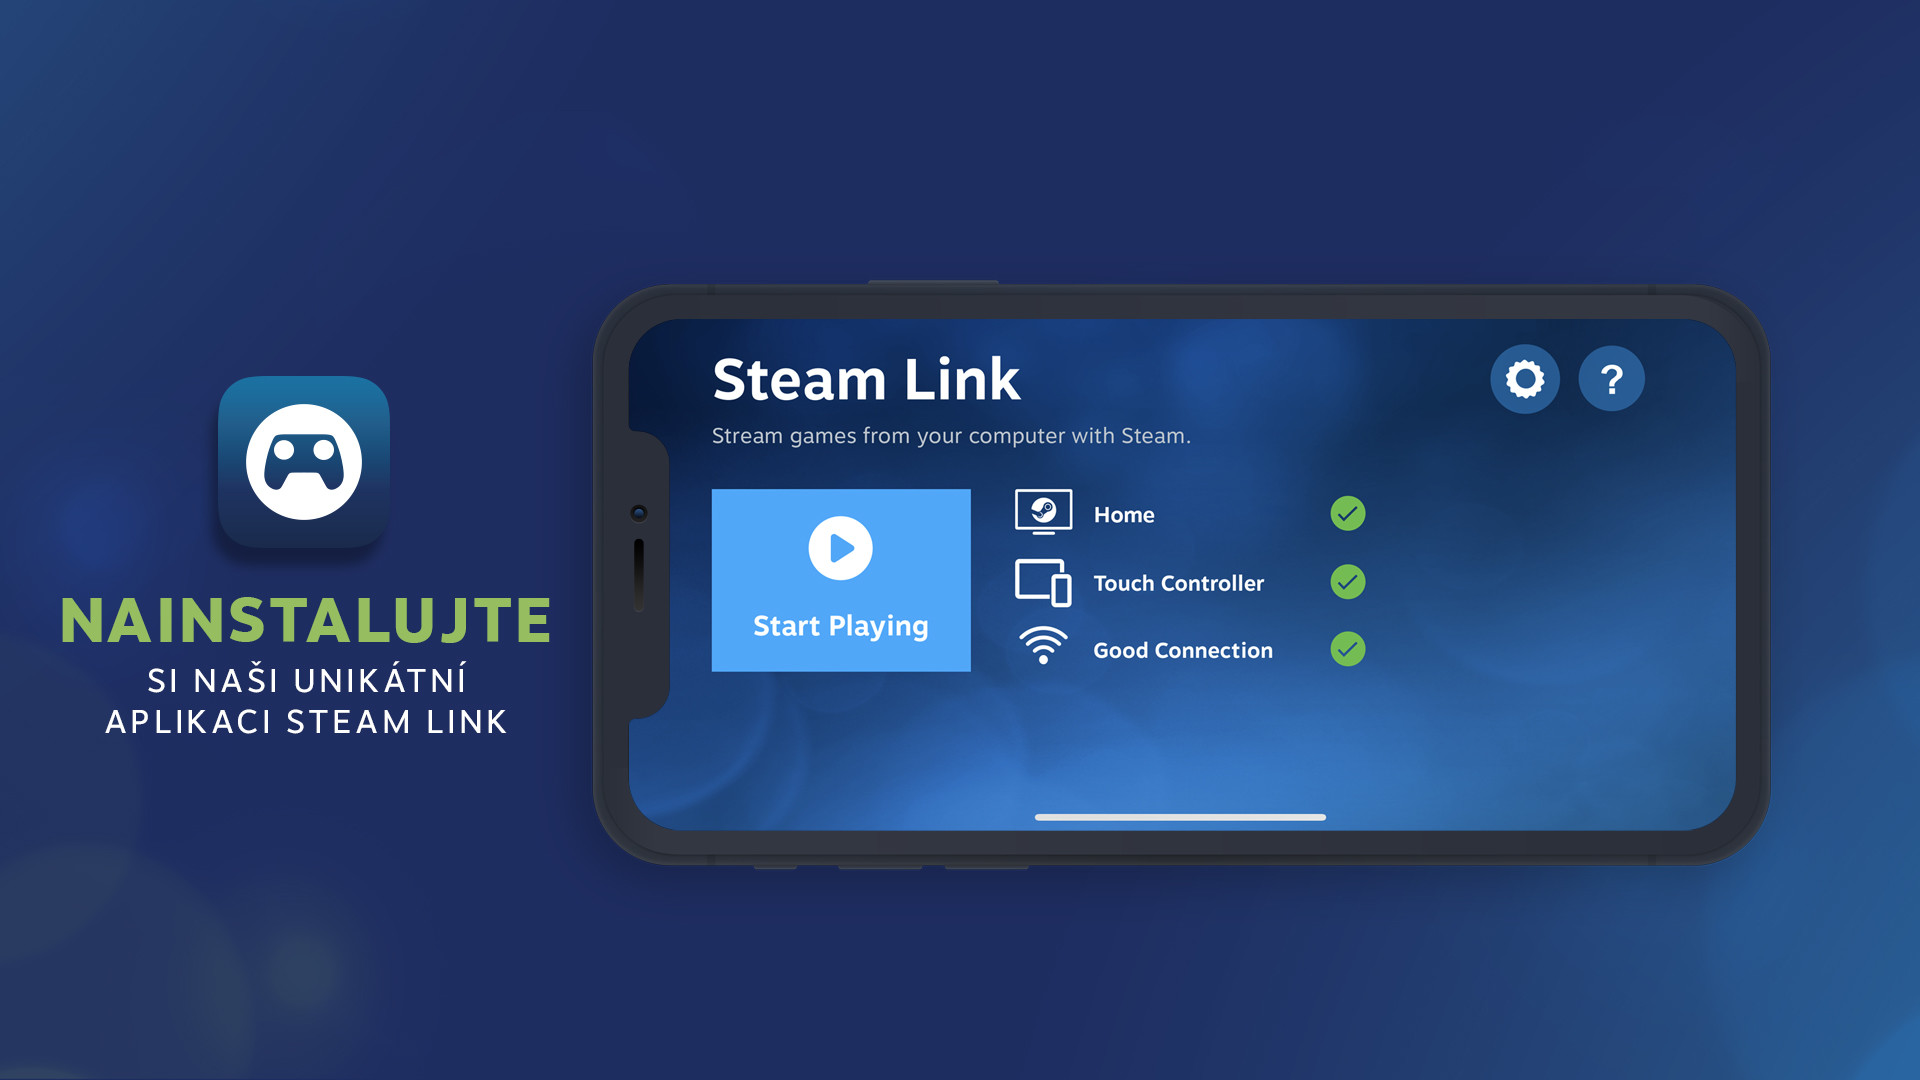 Jak funguje Steam Link?